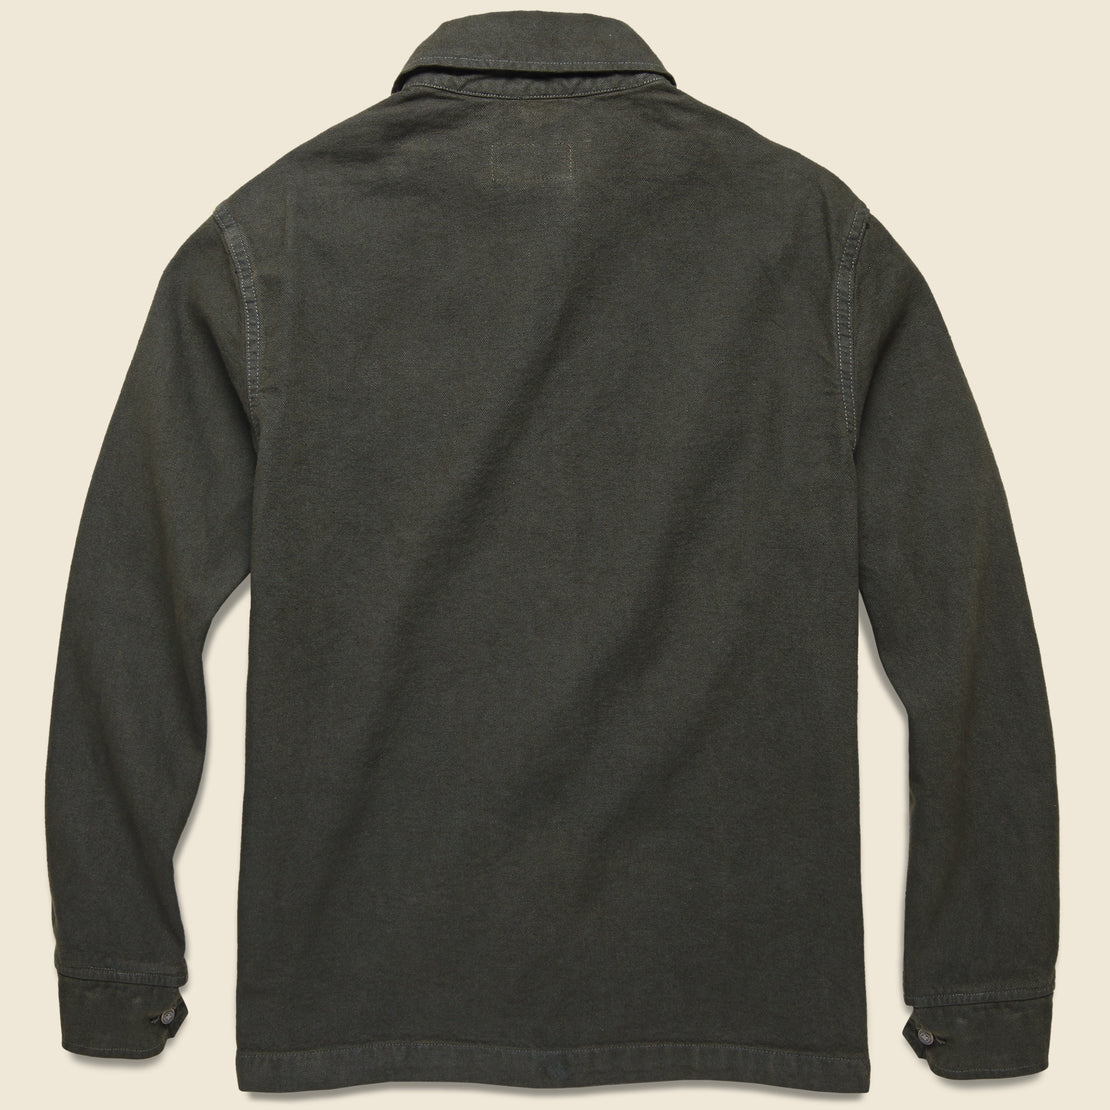 Jack Shirt Jacket - Over-Dyed Black - Imogene + Willie - STAG Provisions - Outerwear - Shirt Jacket